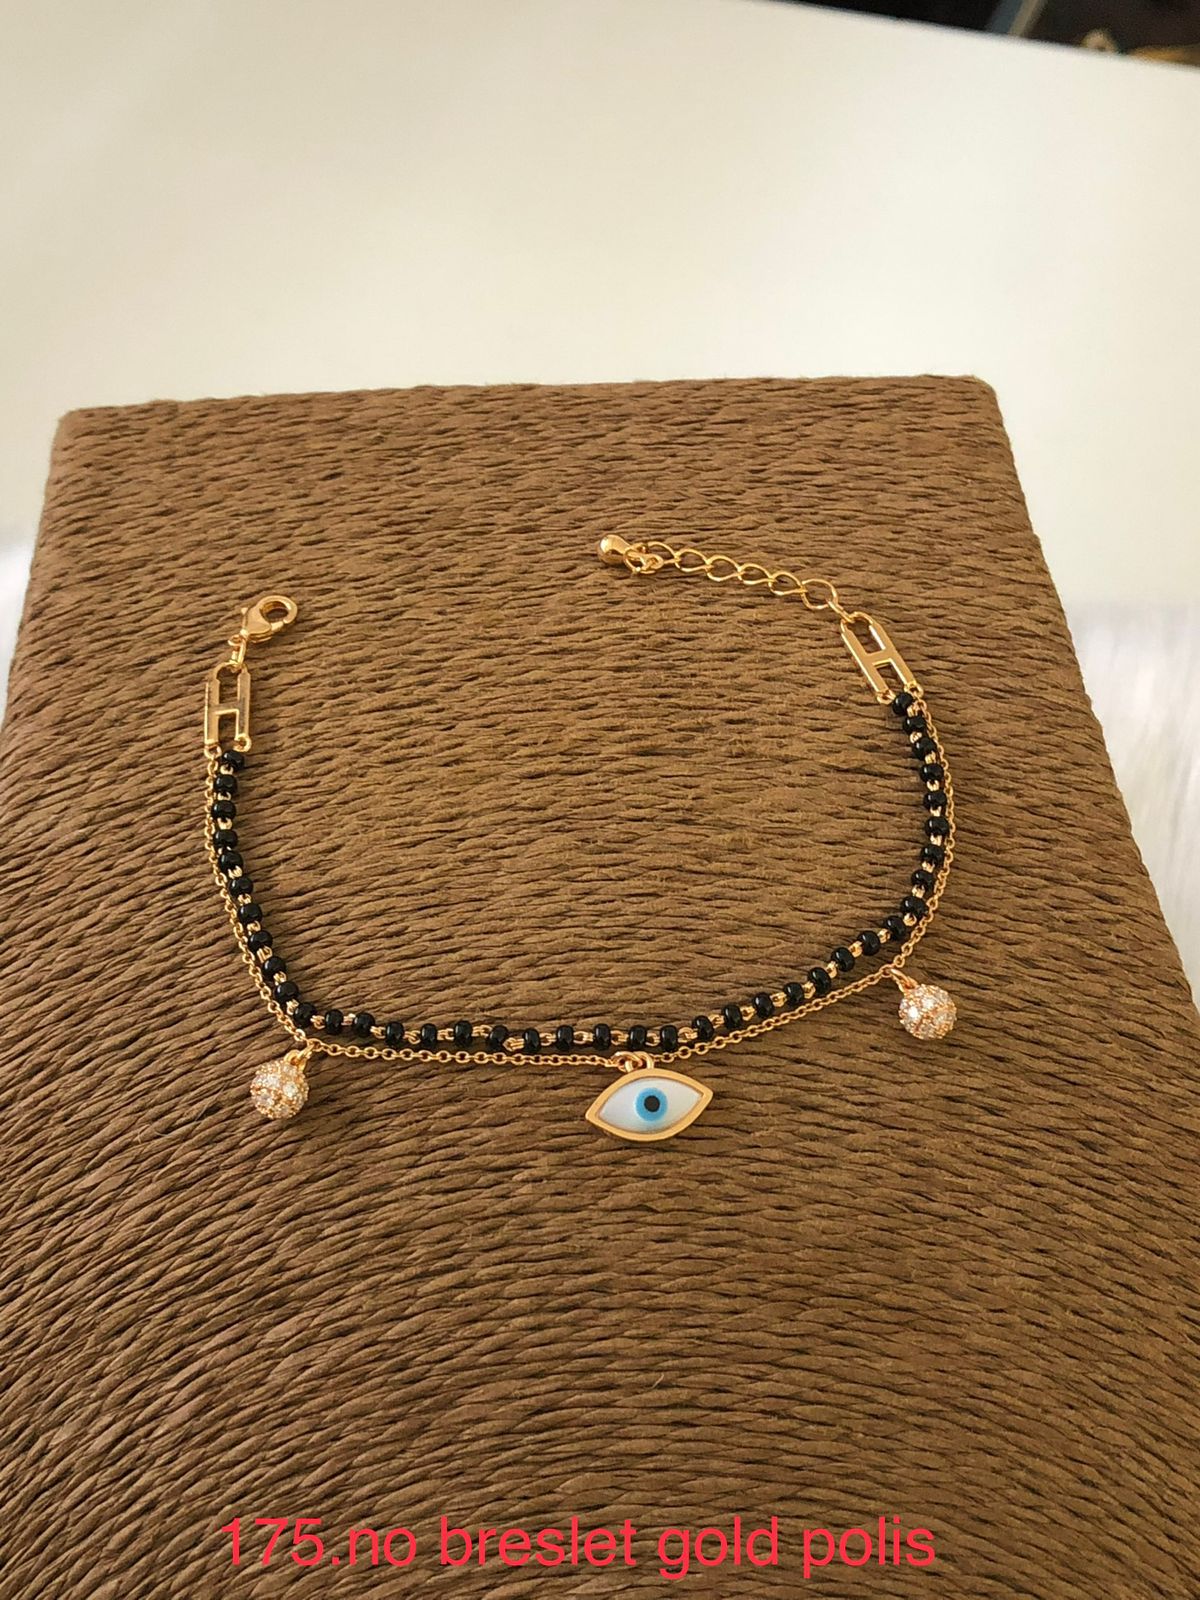 22ct Gold Black Beads Evil Eye Bracelet – Roop Darshan